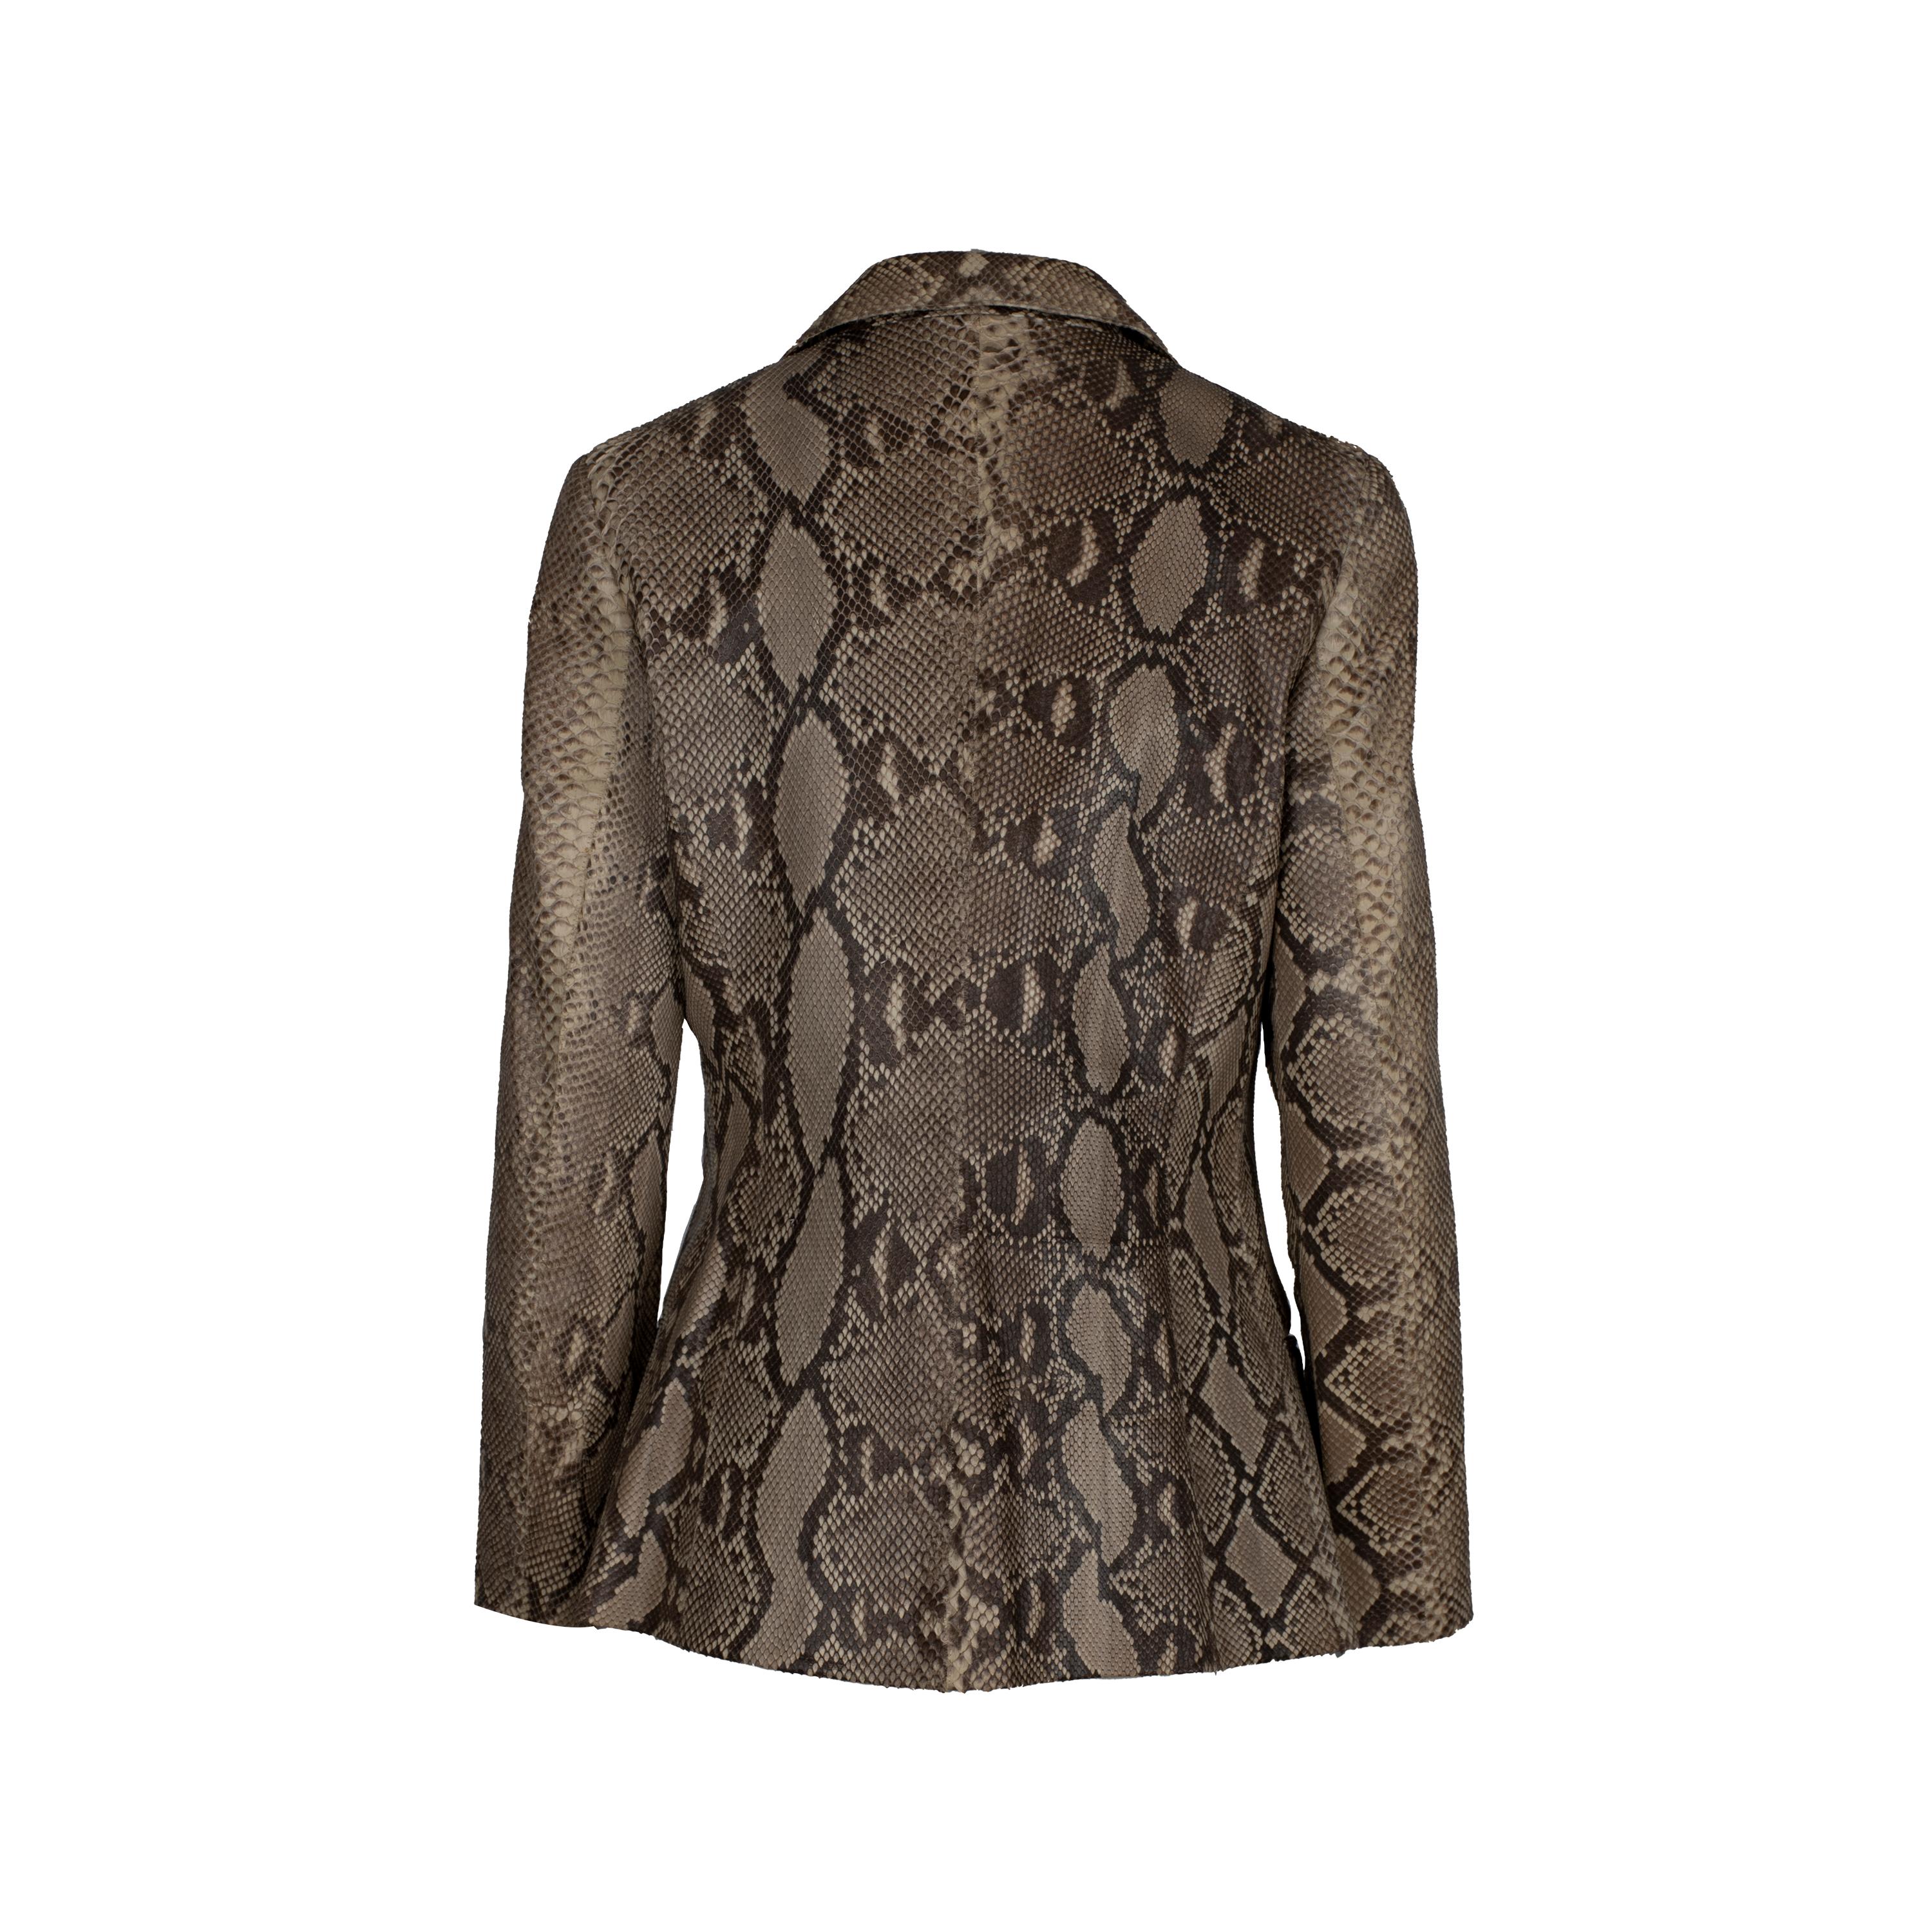 Gianfranco Ferré brown python notch lapel blazer jacket, buttons fastening, frontal pocket.

Total length:70 cm
 Measure sleeves:61 cm
 Bust:47 cm 
Shoulders: 41 cm